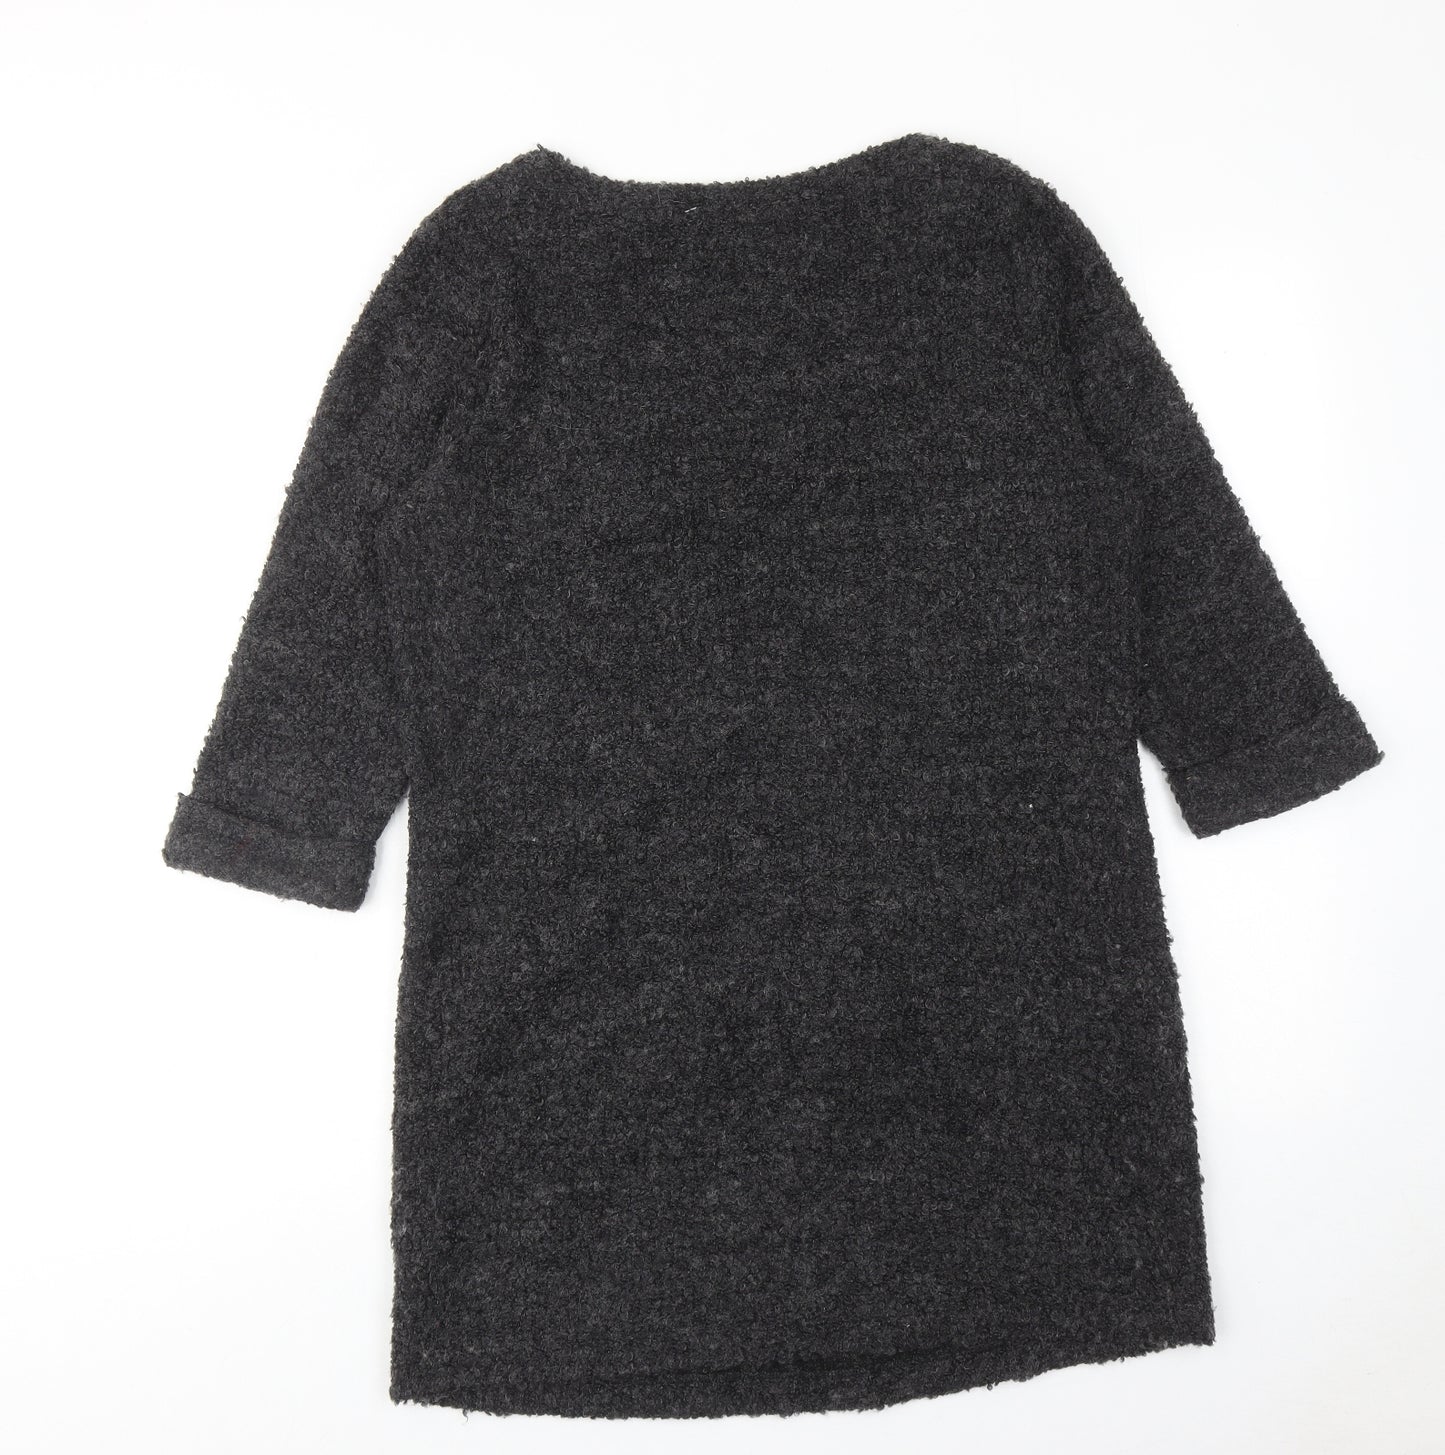 NEXT Womens Grey Polyester Jumper Dress Size 14 V-Neck Pullover